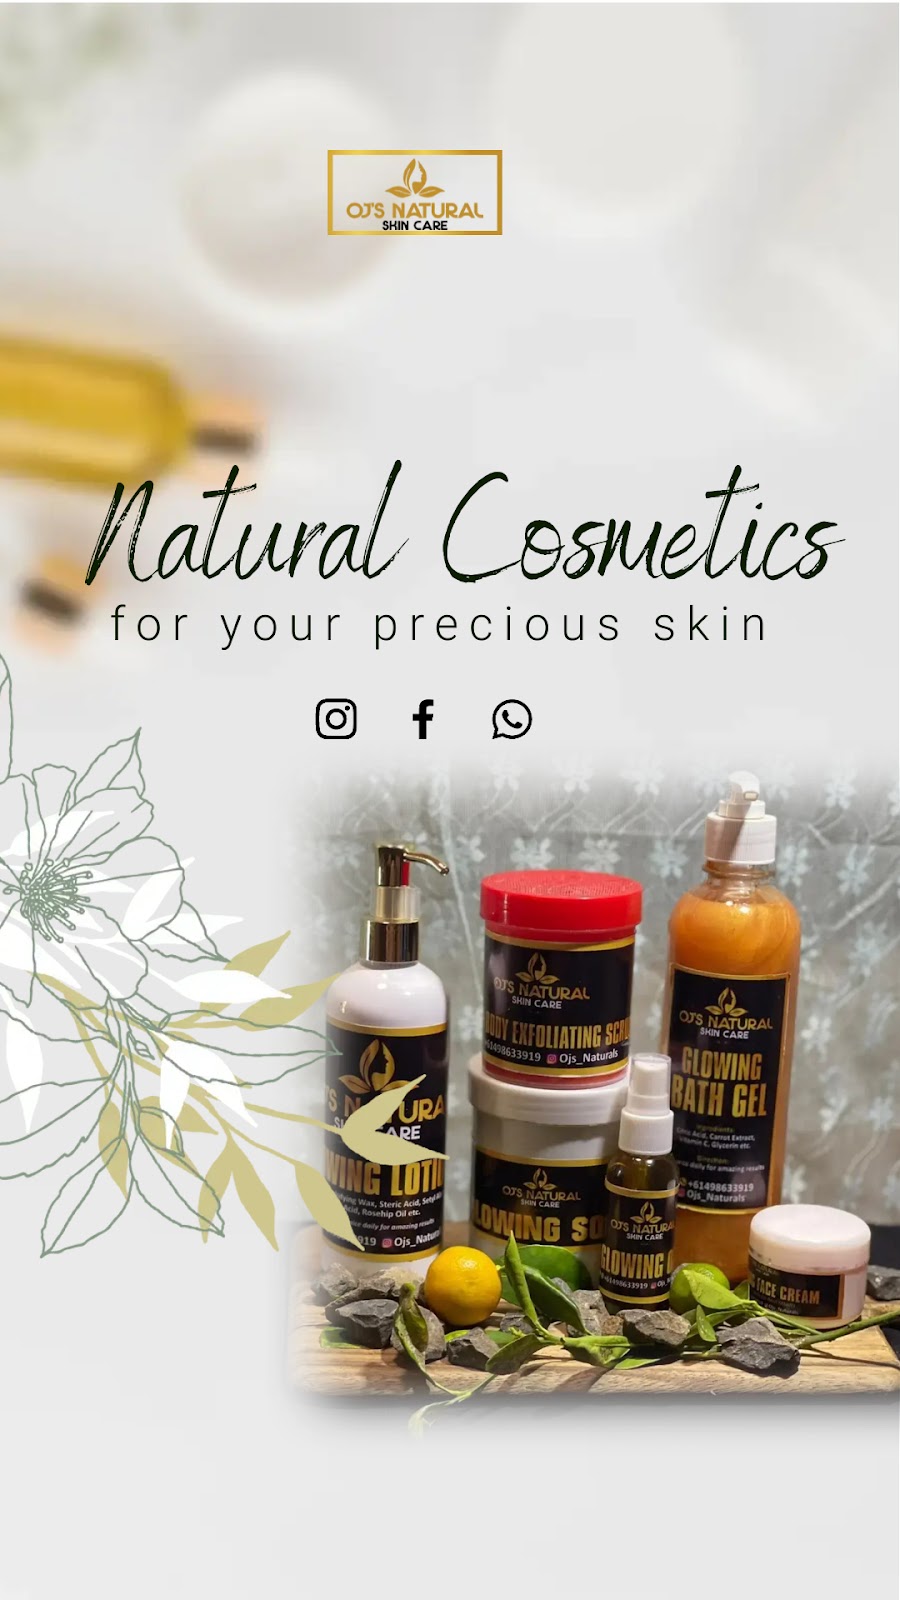 OJS Naturals Skincare |  | Fryar Rd, Eagleby QLD 4207, Australia | 0498633919 OR +61 498 633 919